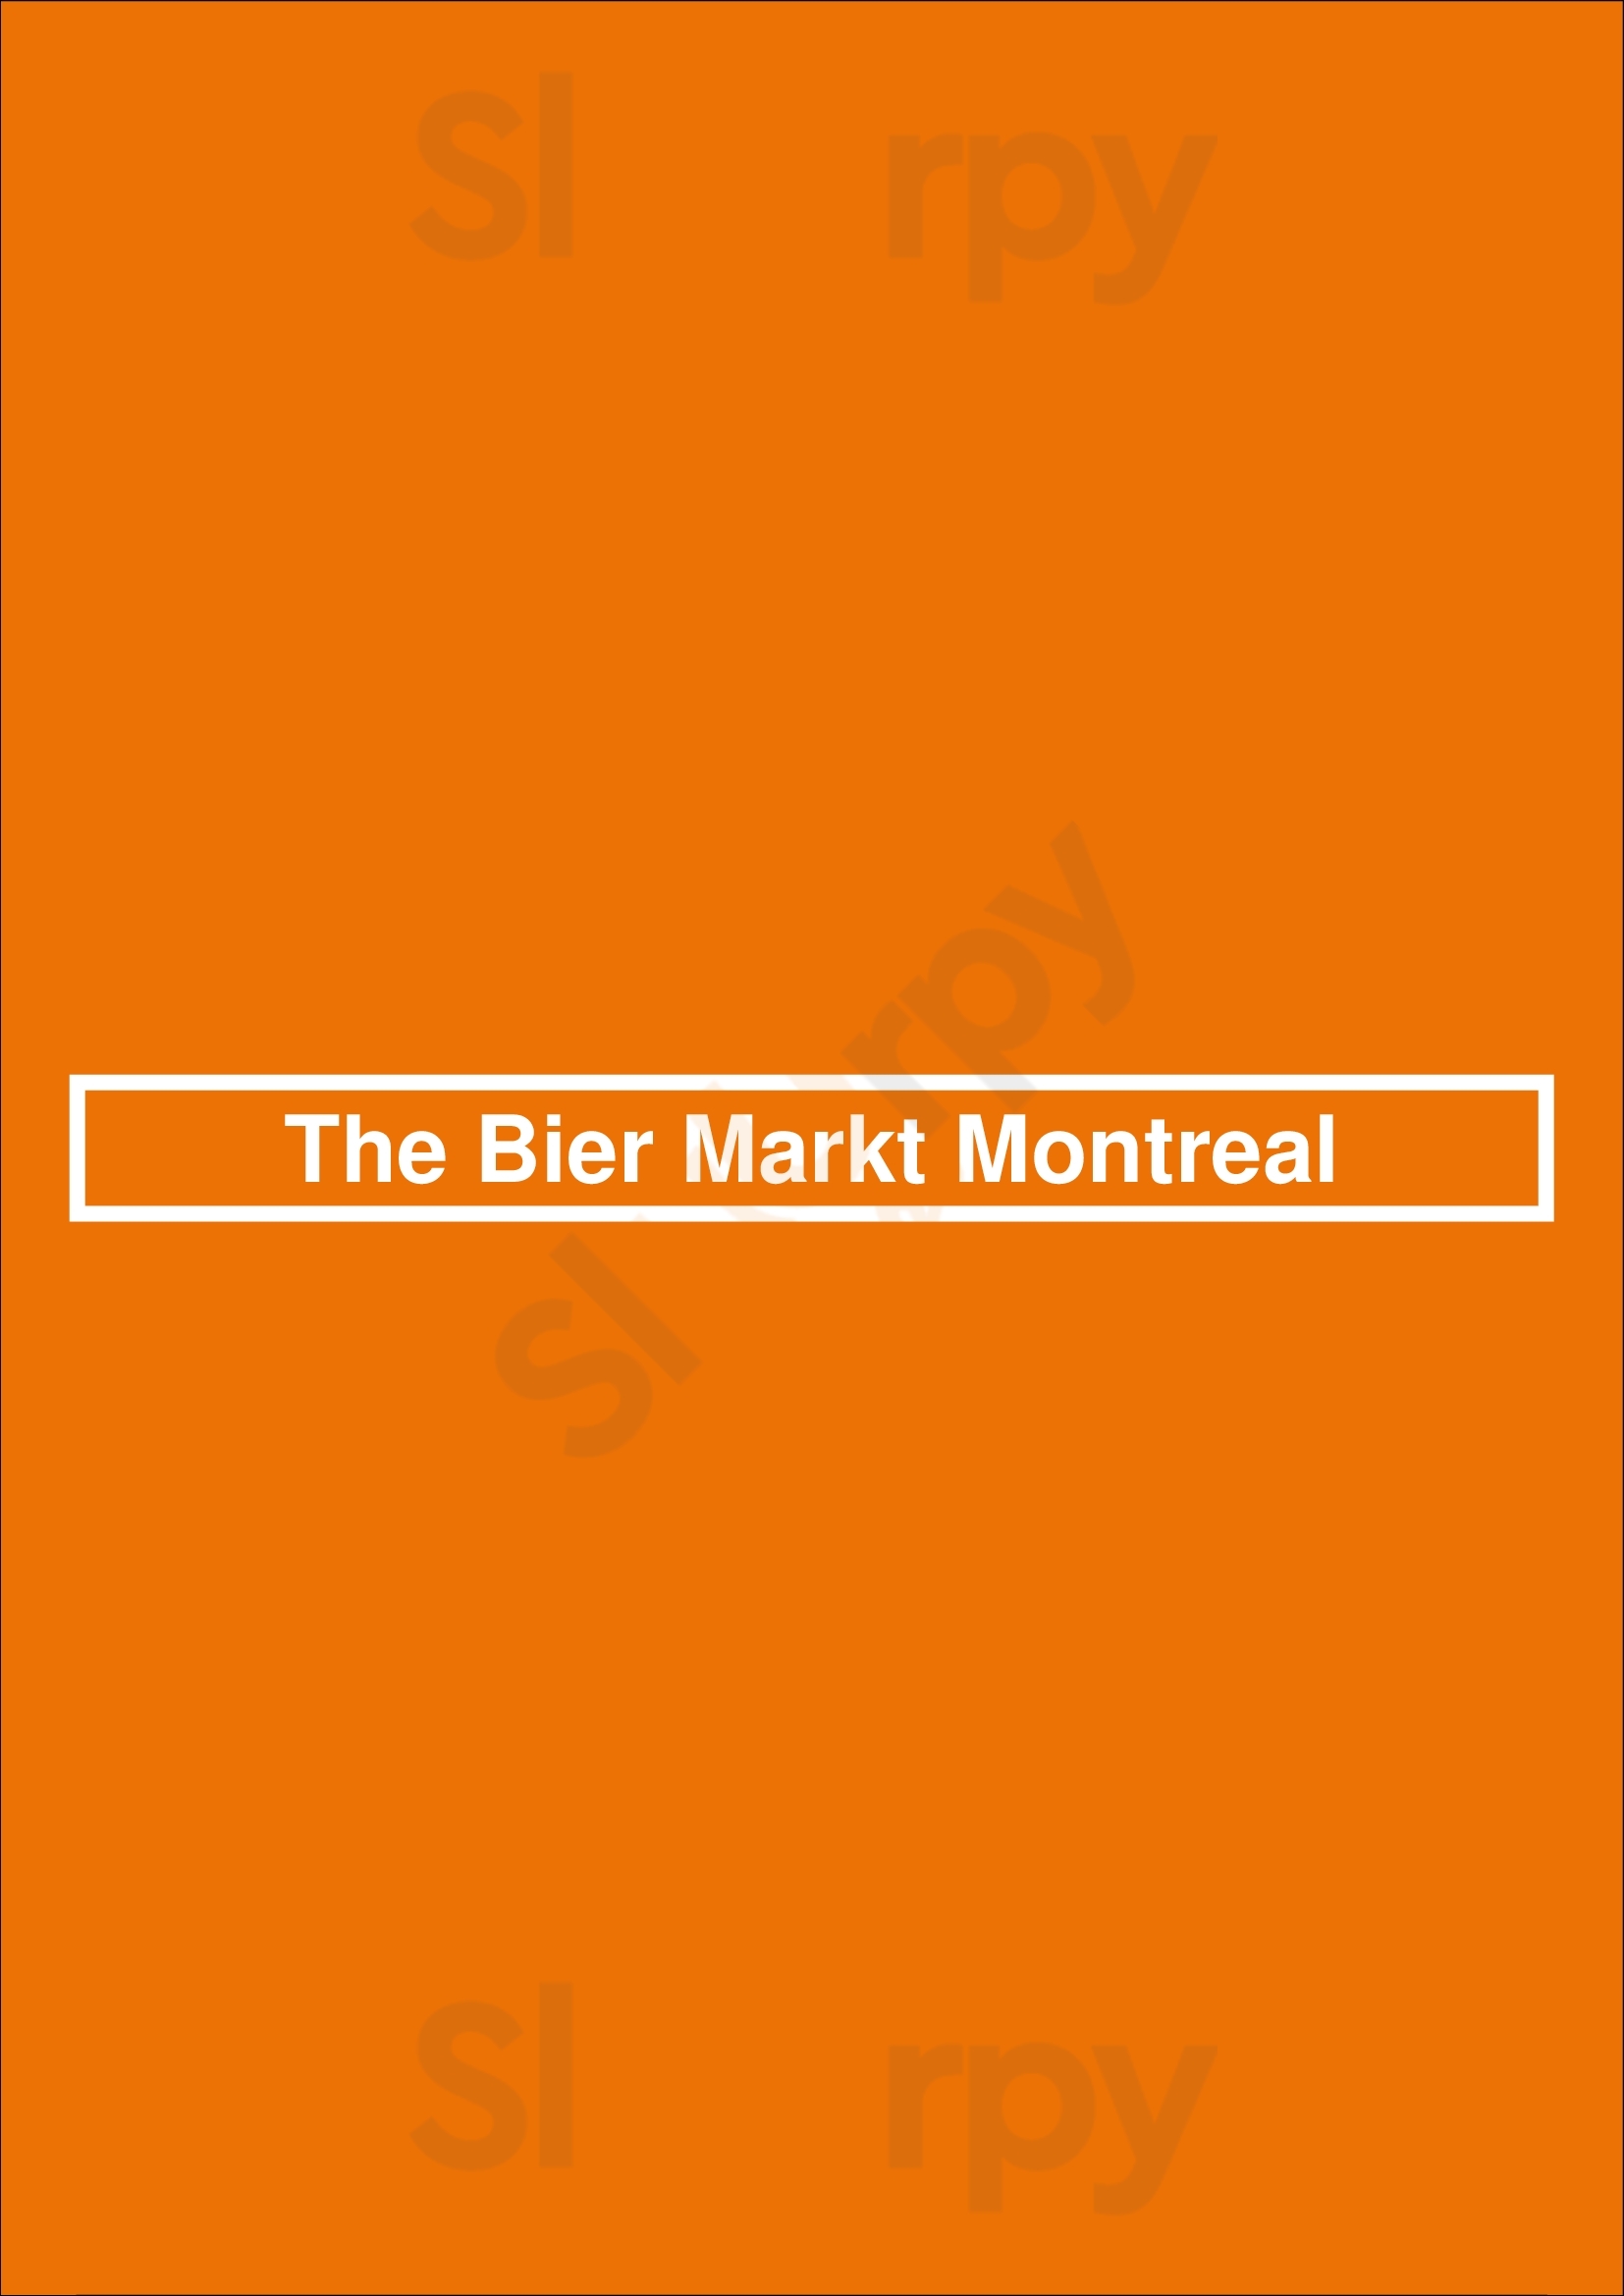 Bier Markt Montreal Menu - 1